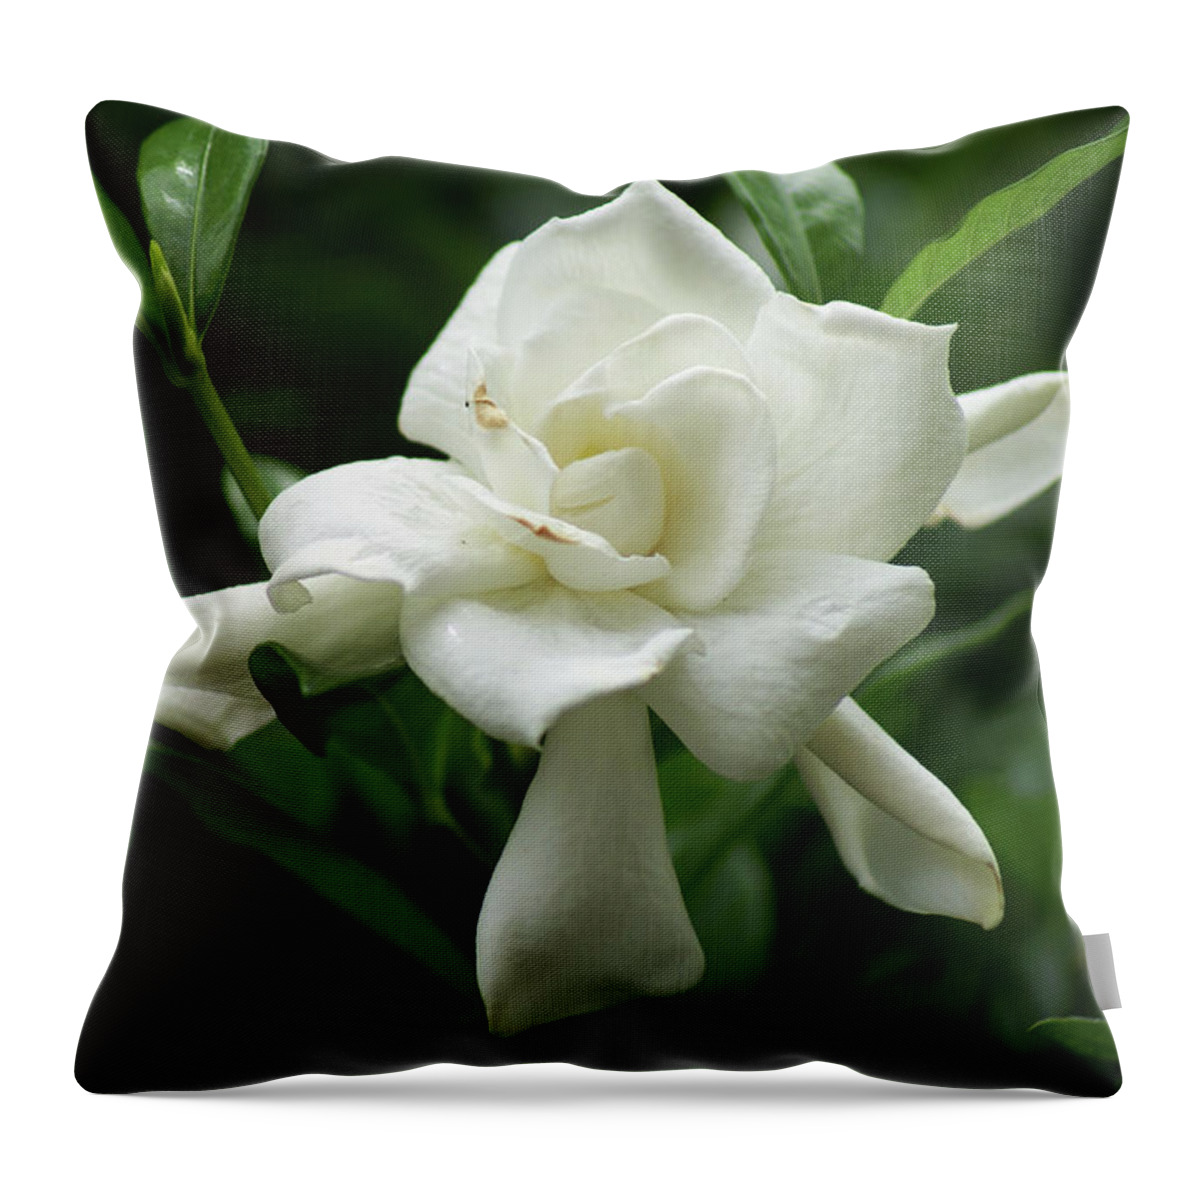  Throw Pillow featuring the photograph Gardenia by Heather E Harman